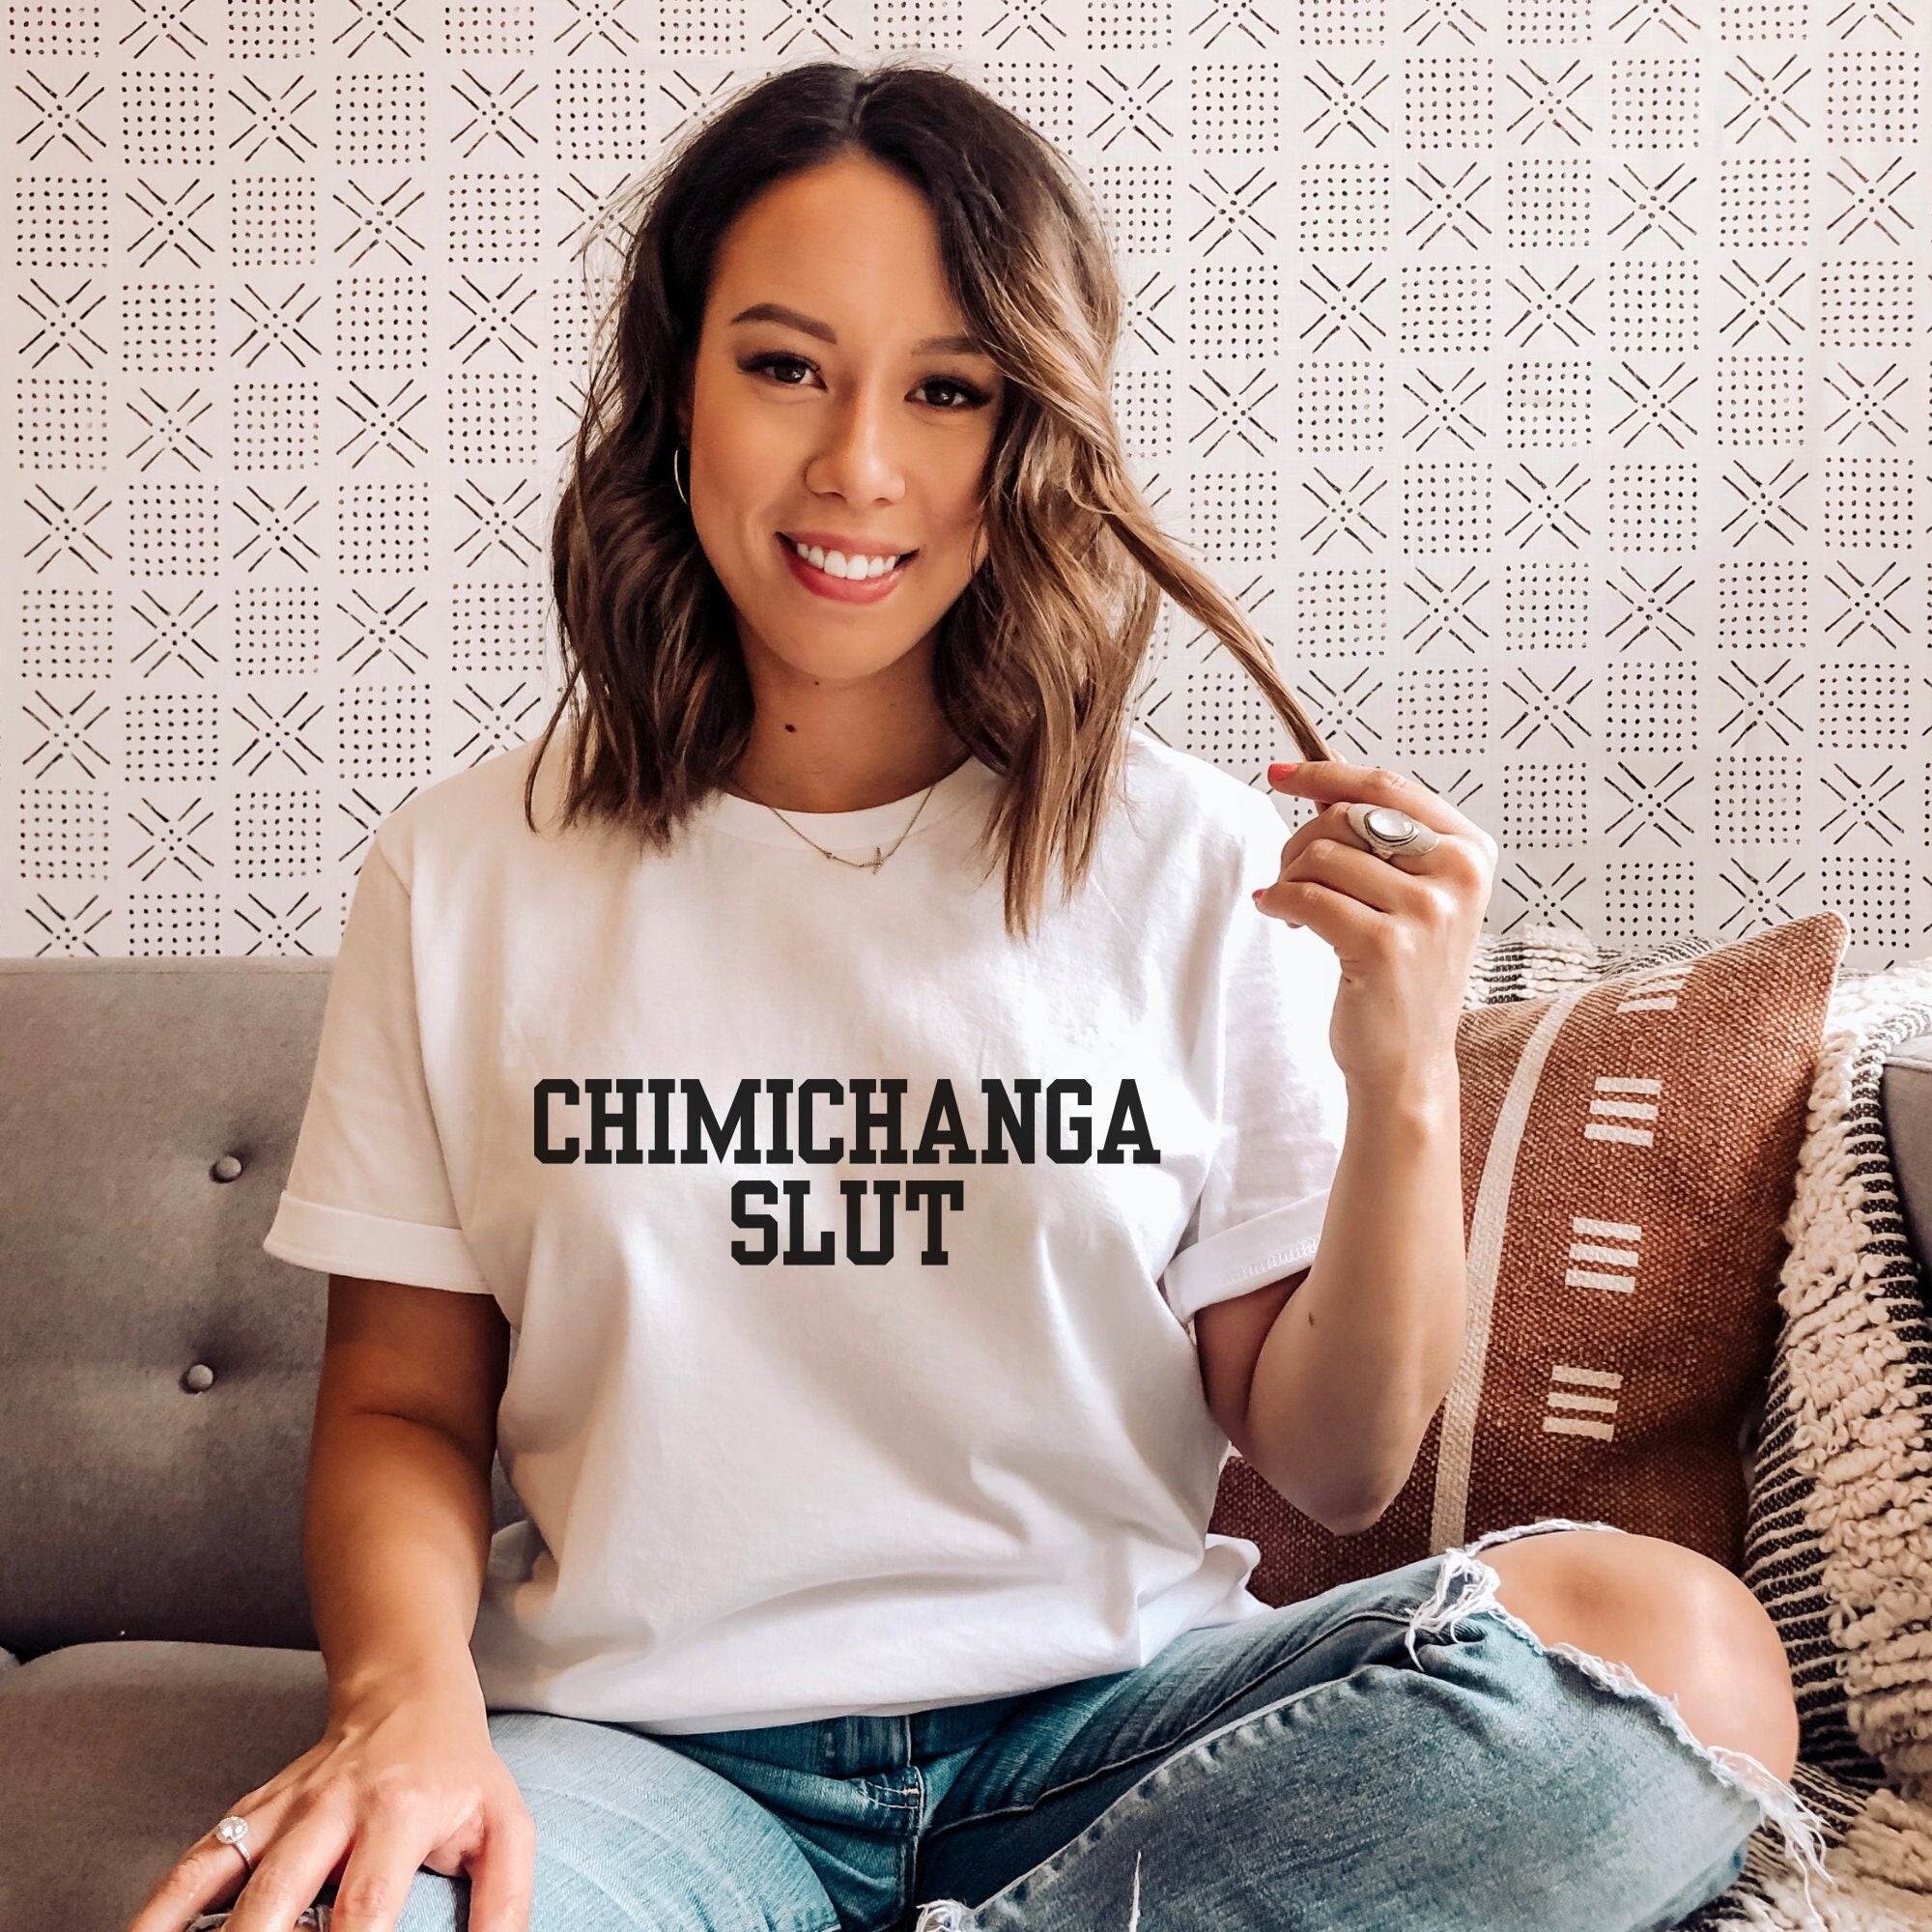 Chimichanga Slut Women's T-Shirt